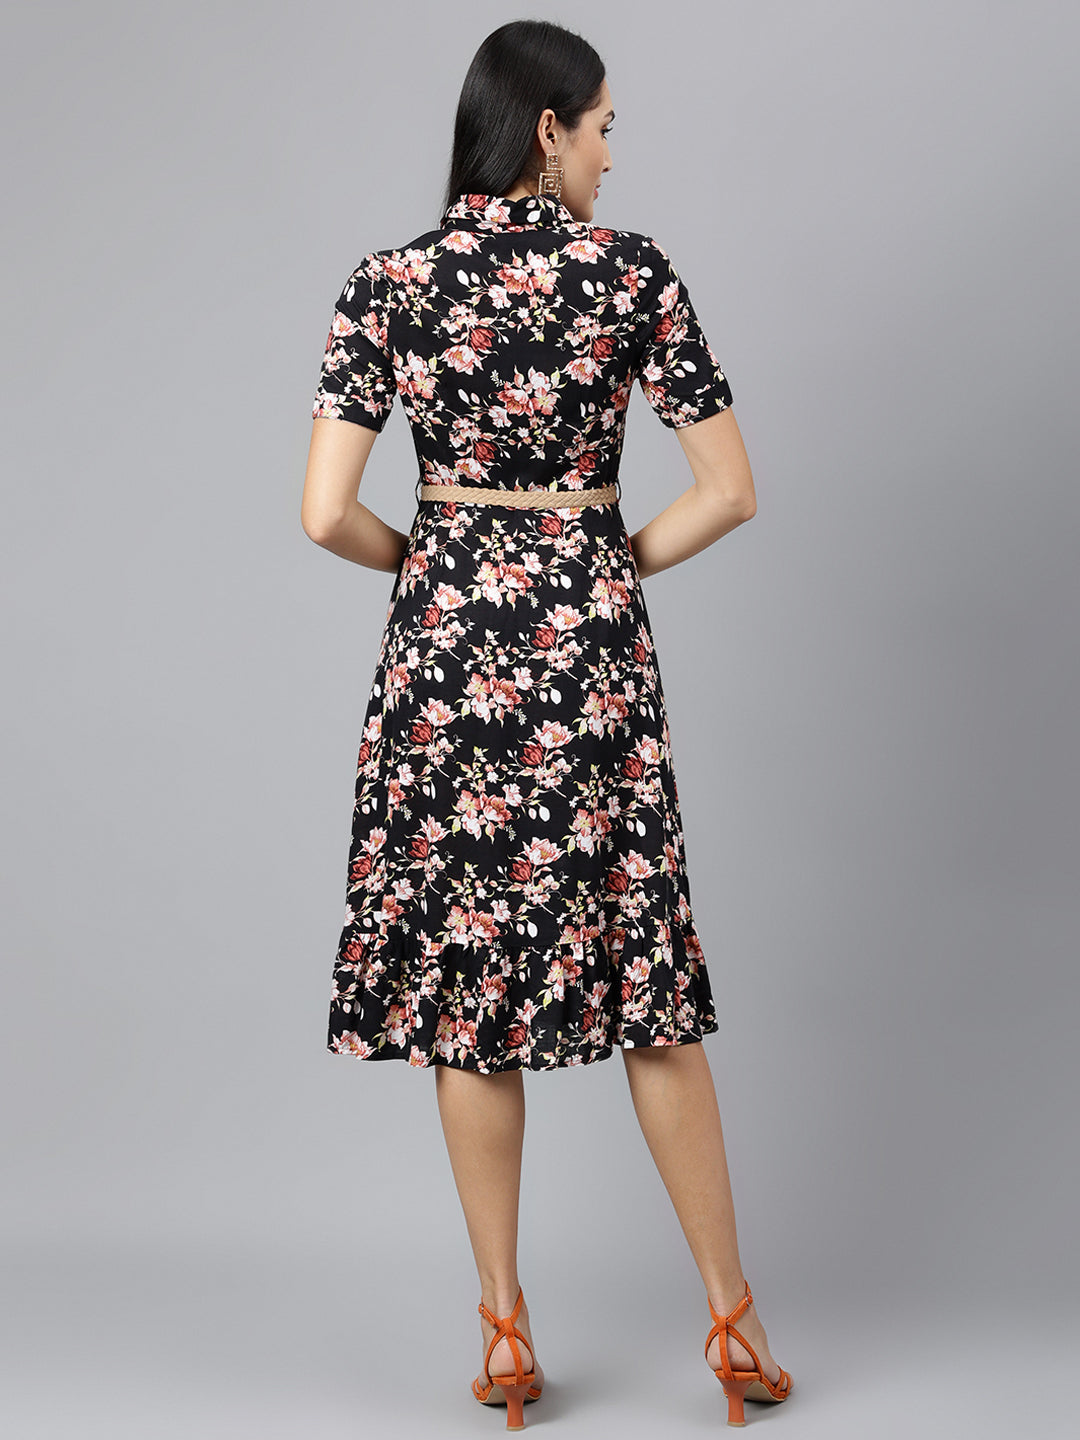 Black Short Sleeve Mandarin Collar Printed Knee Length Dress For Casual Wear